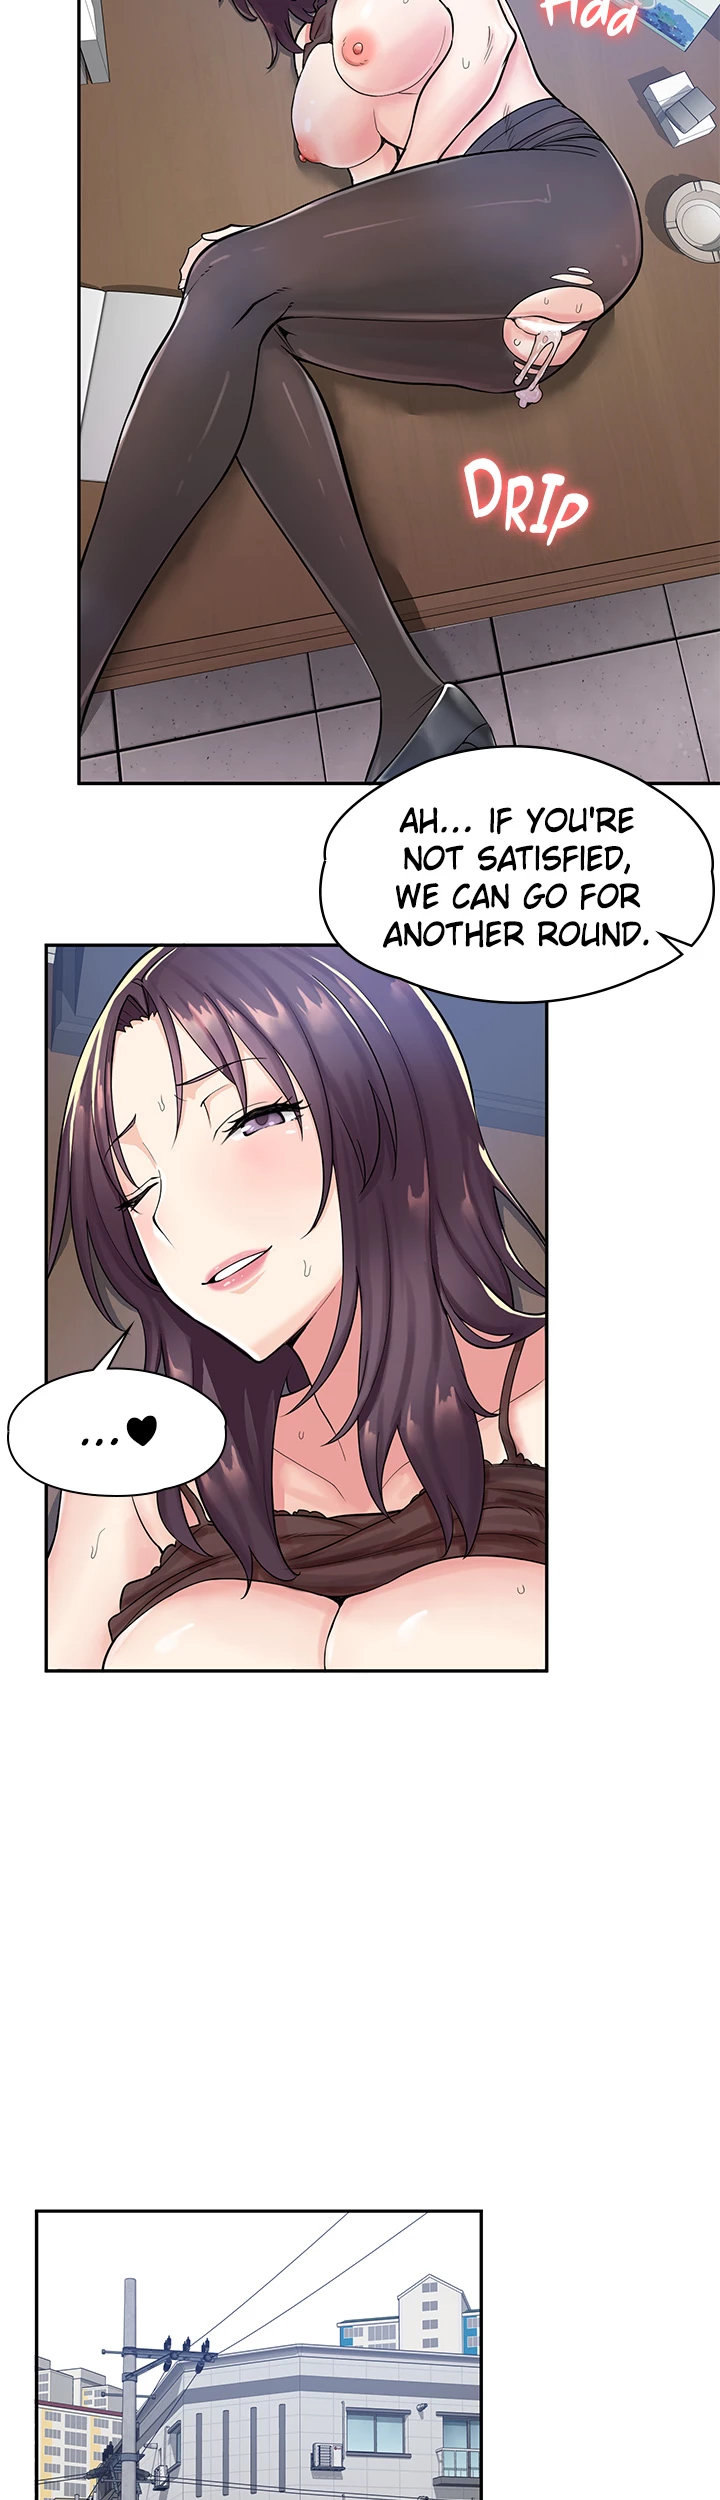 Erotic Manga Café Girls - Chapter 1 Page 23